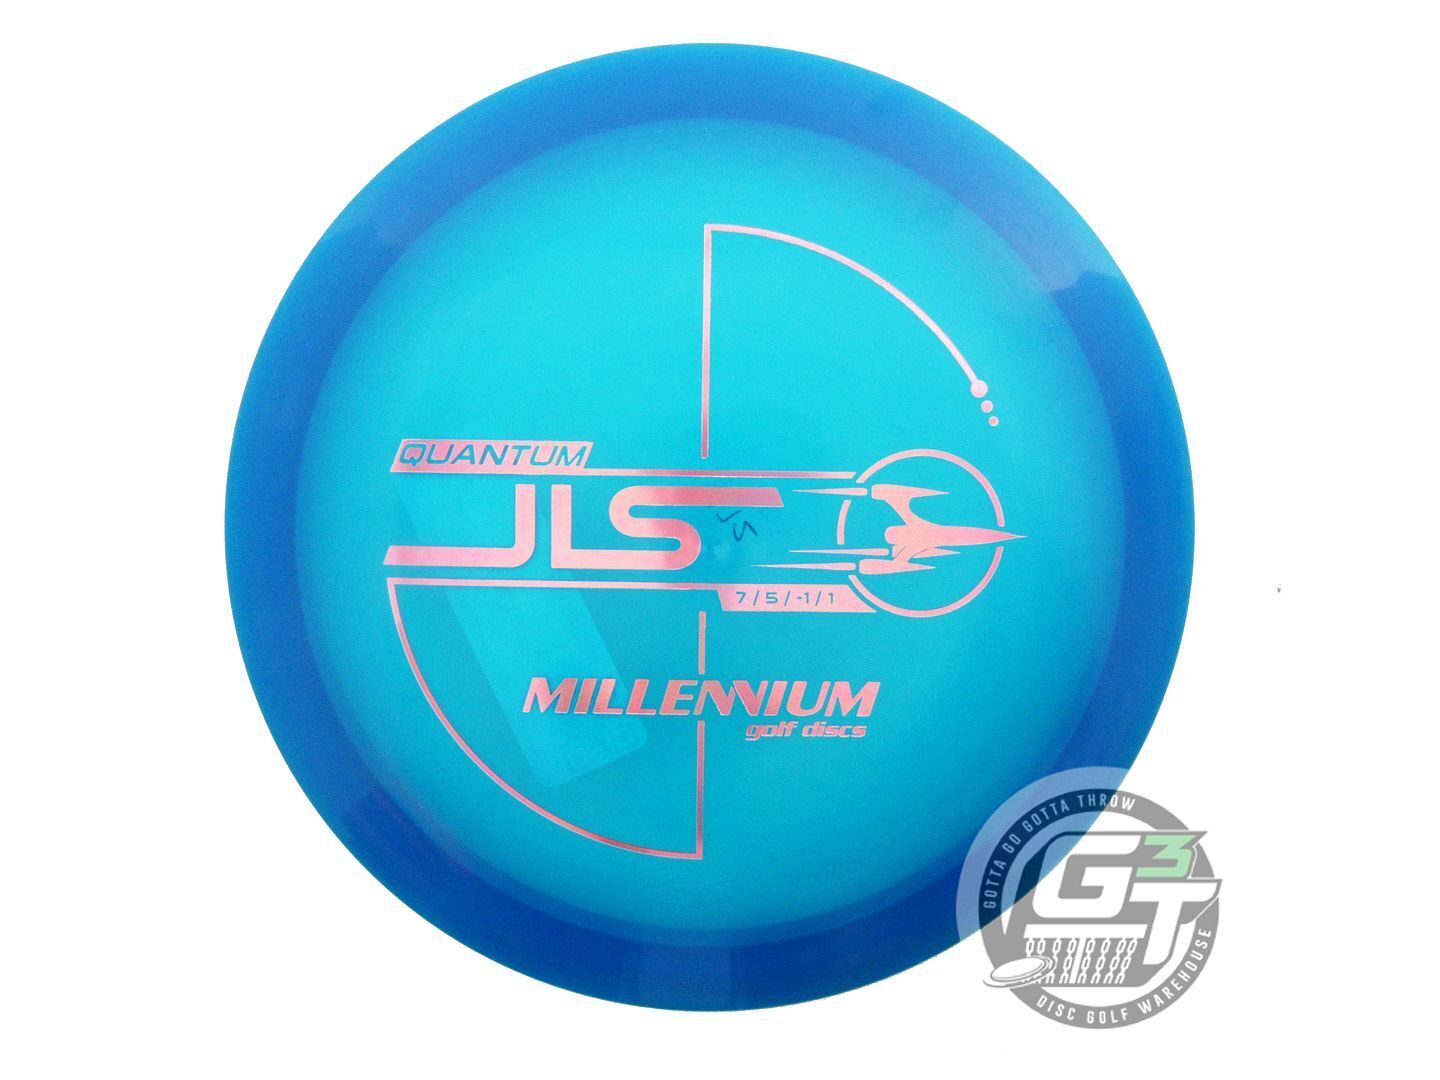 Millennium Quantum JLS Fairway Driver Golf Disc (Individually Listed)